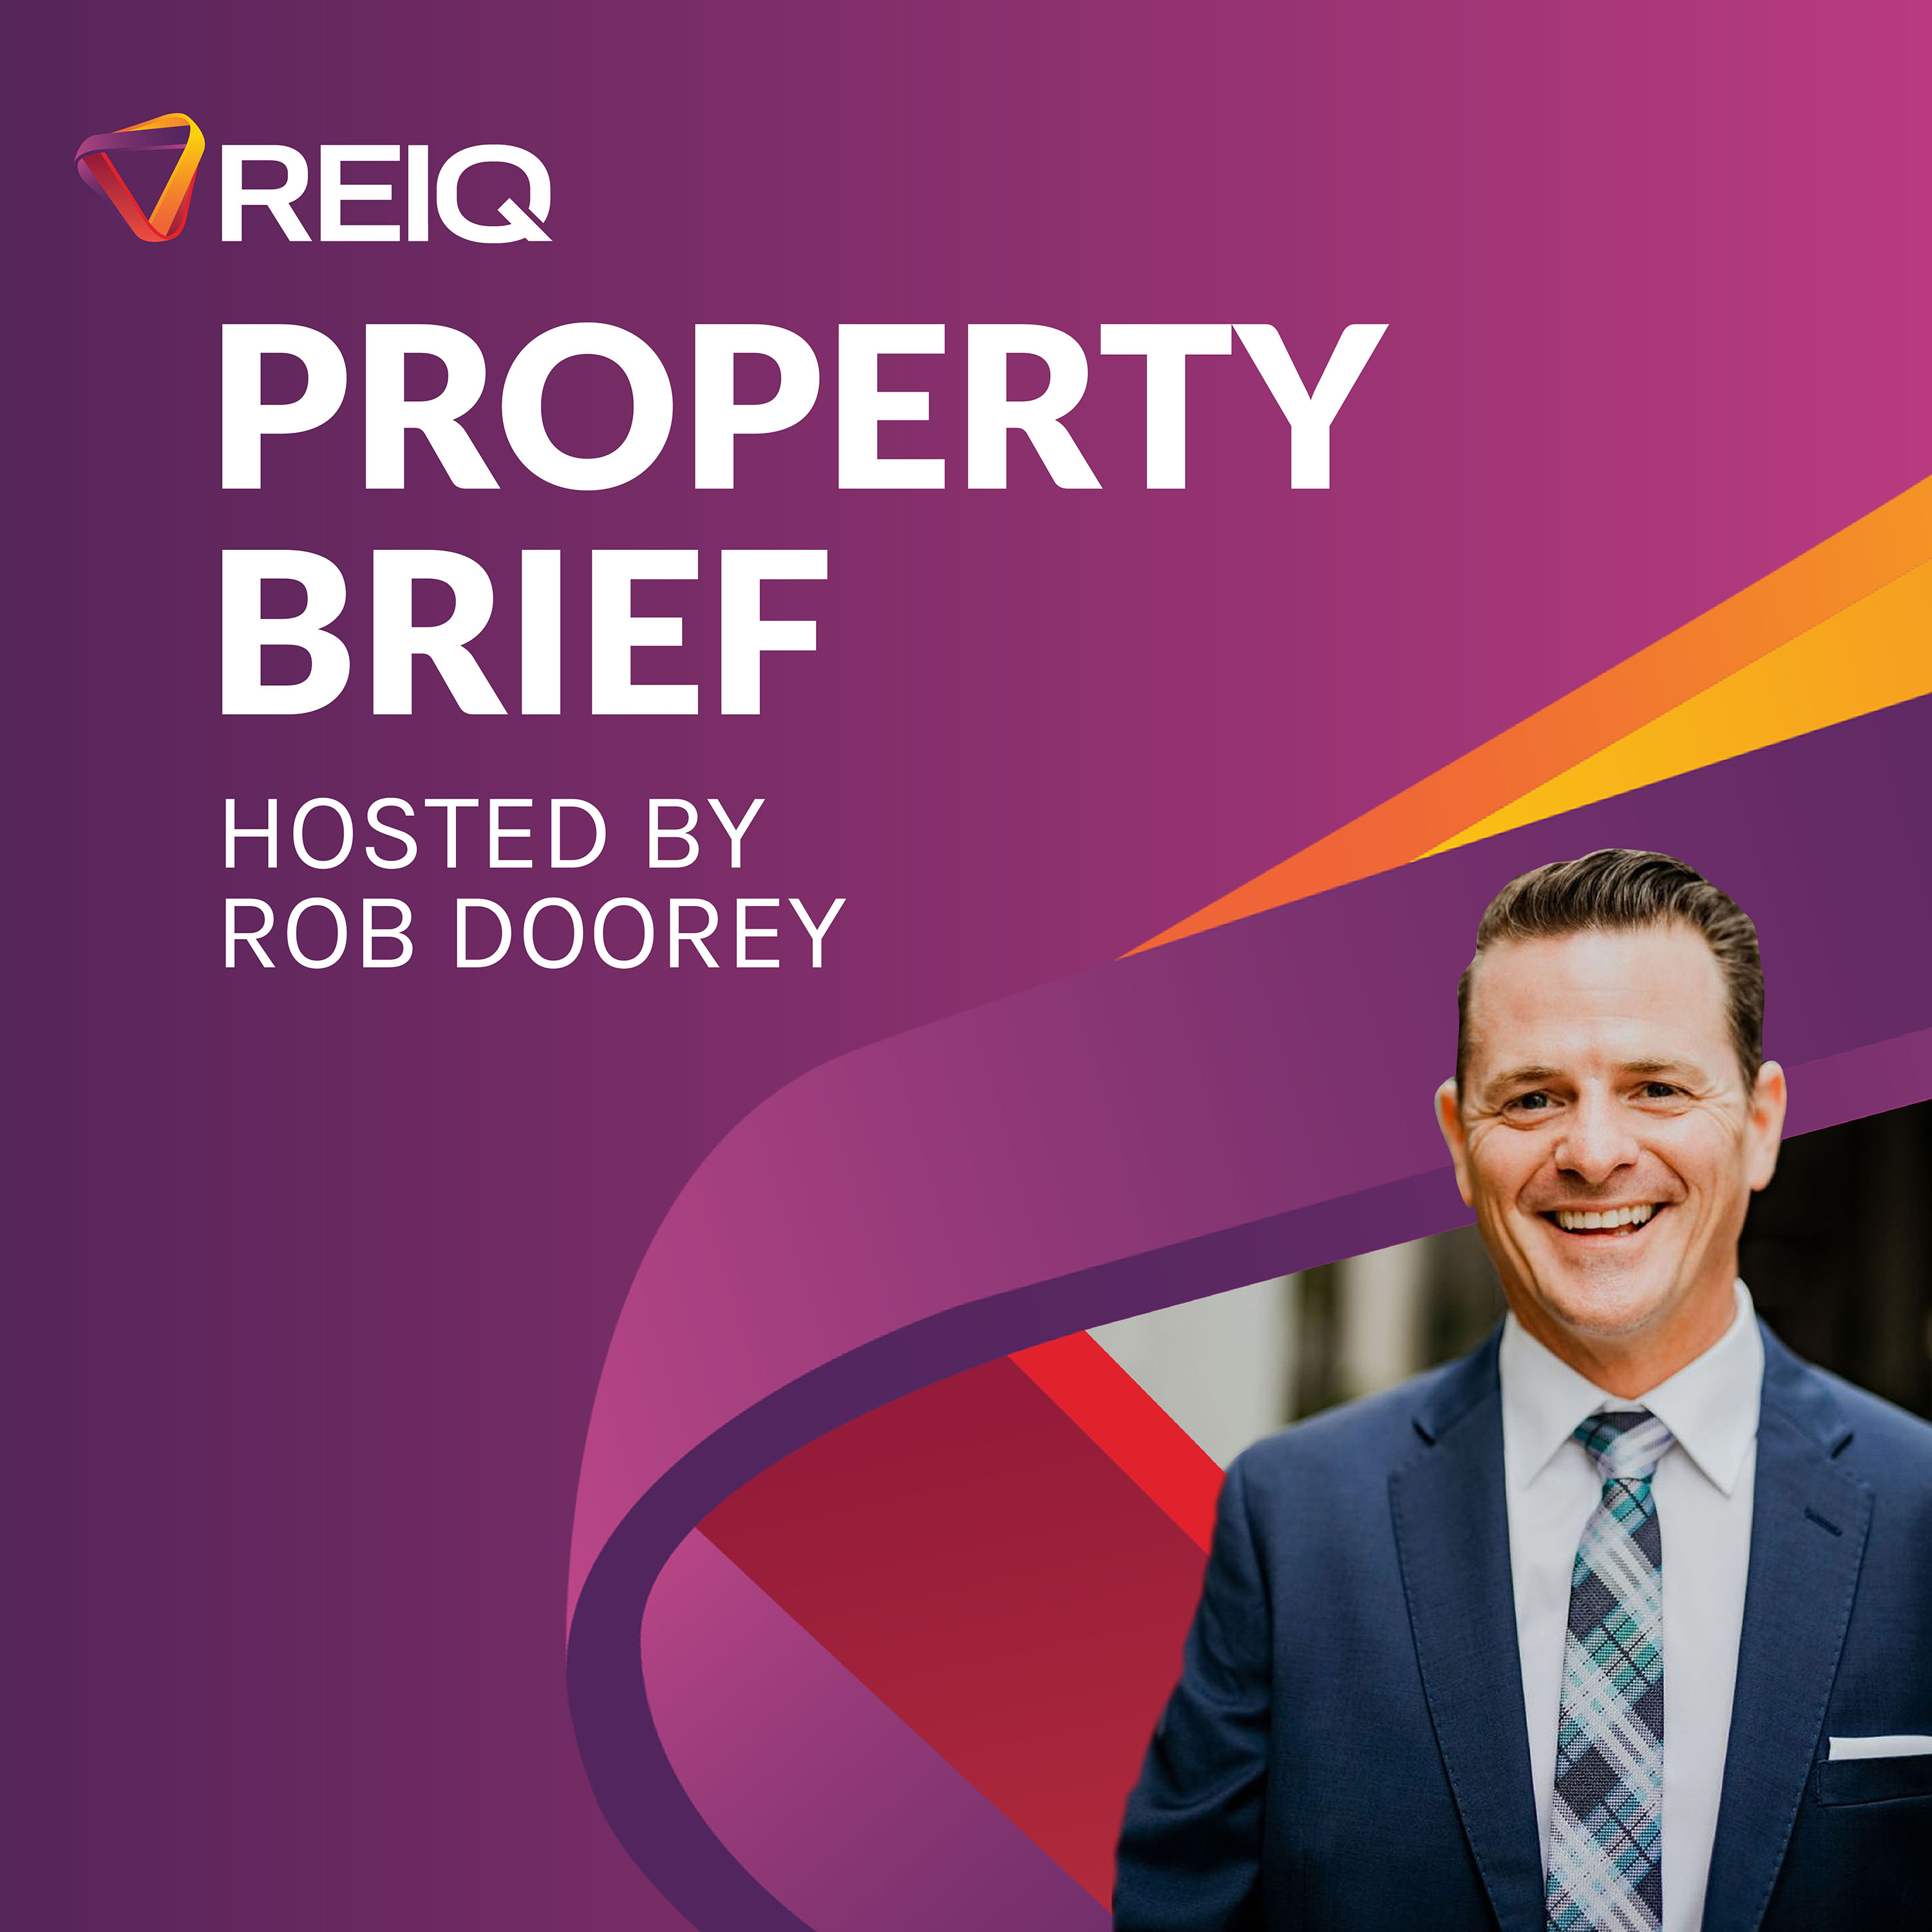 REIQ Property Brief